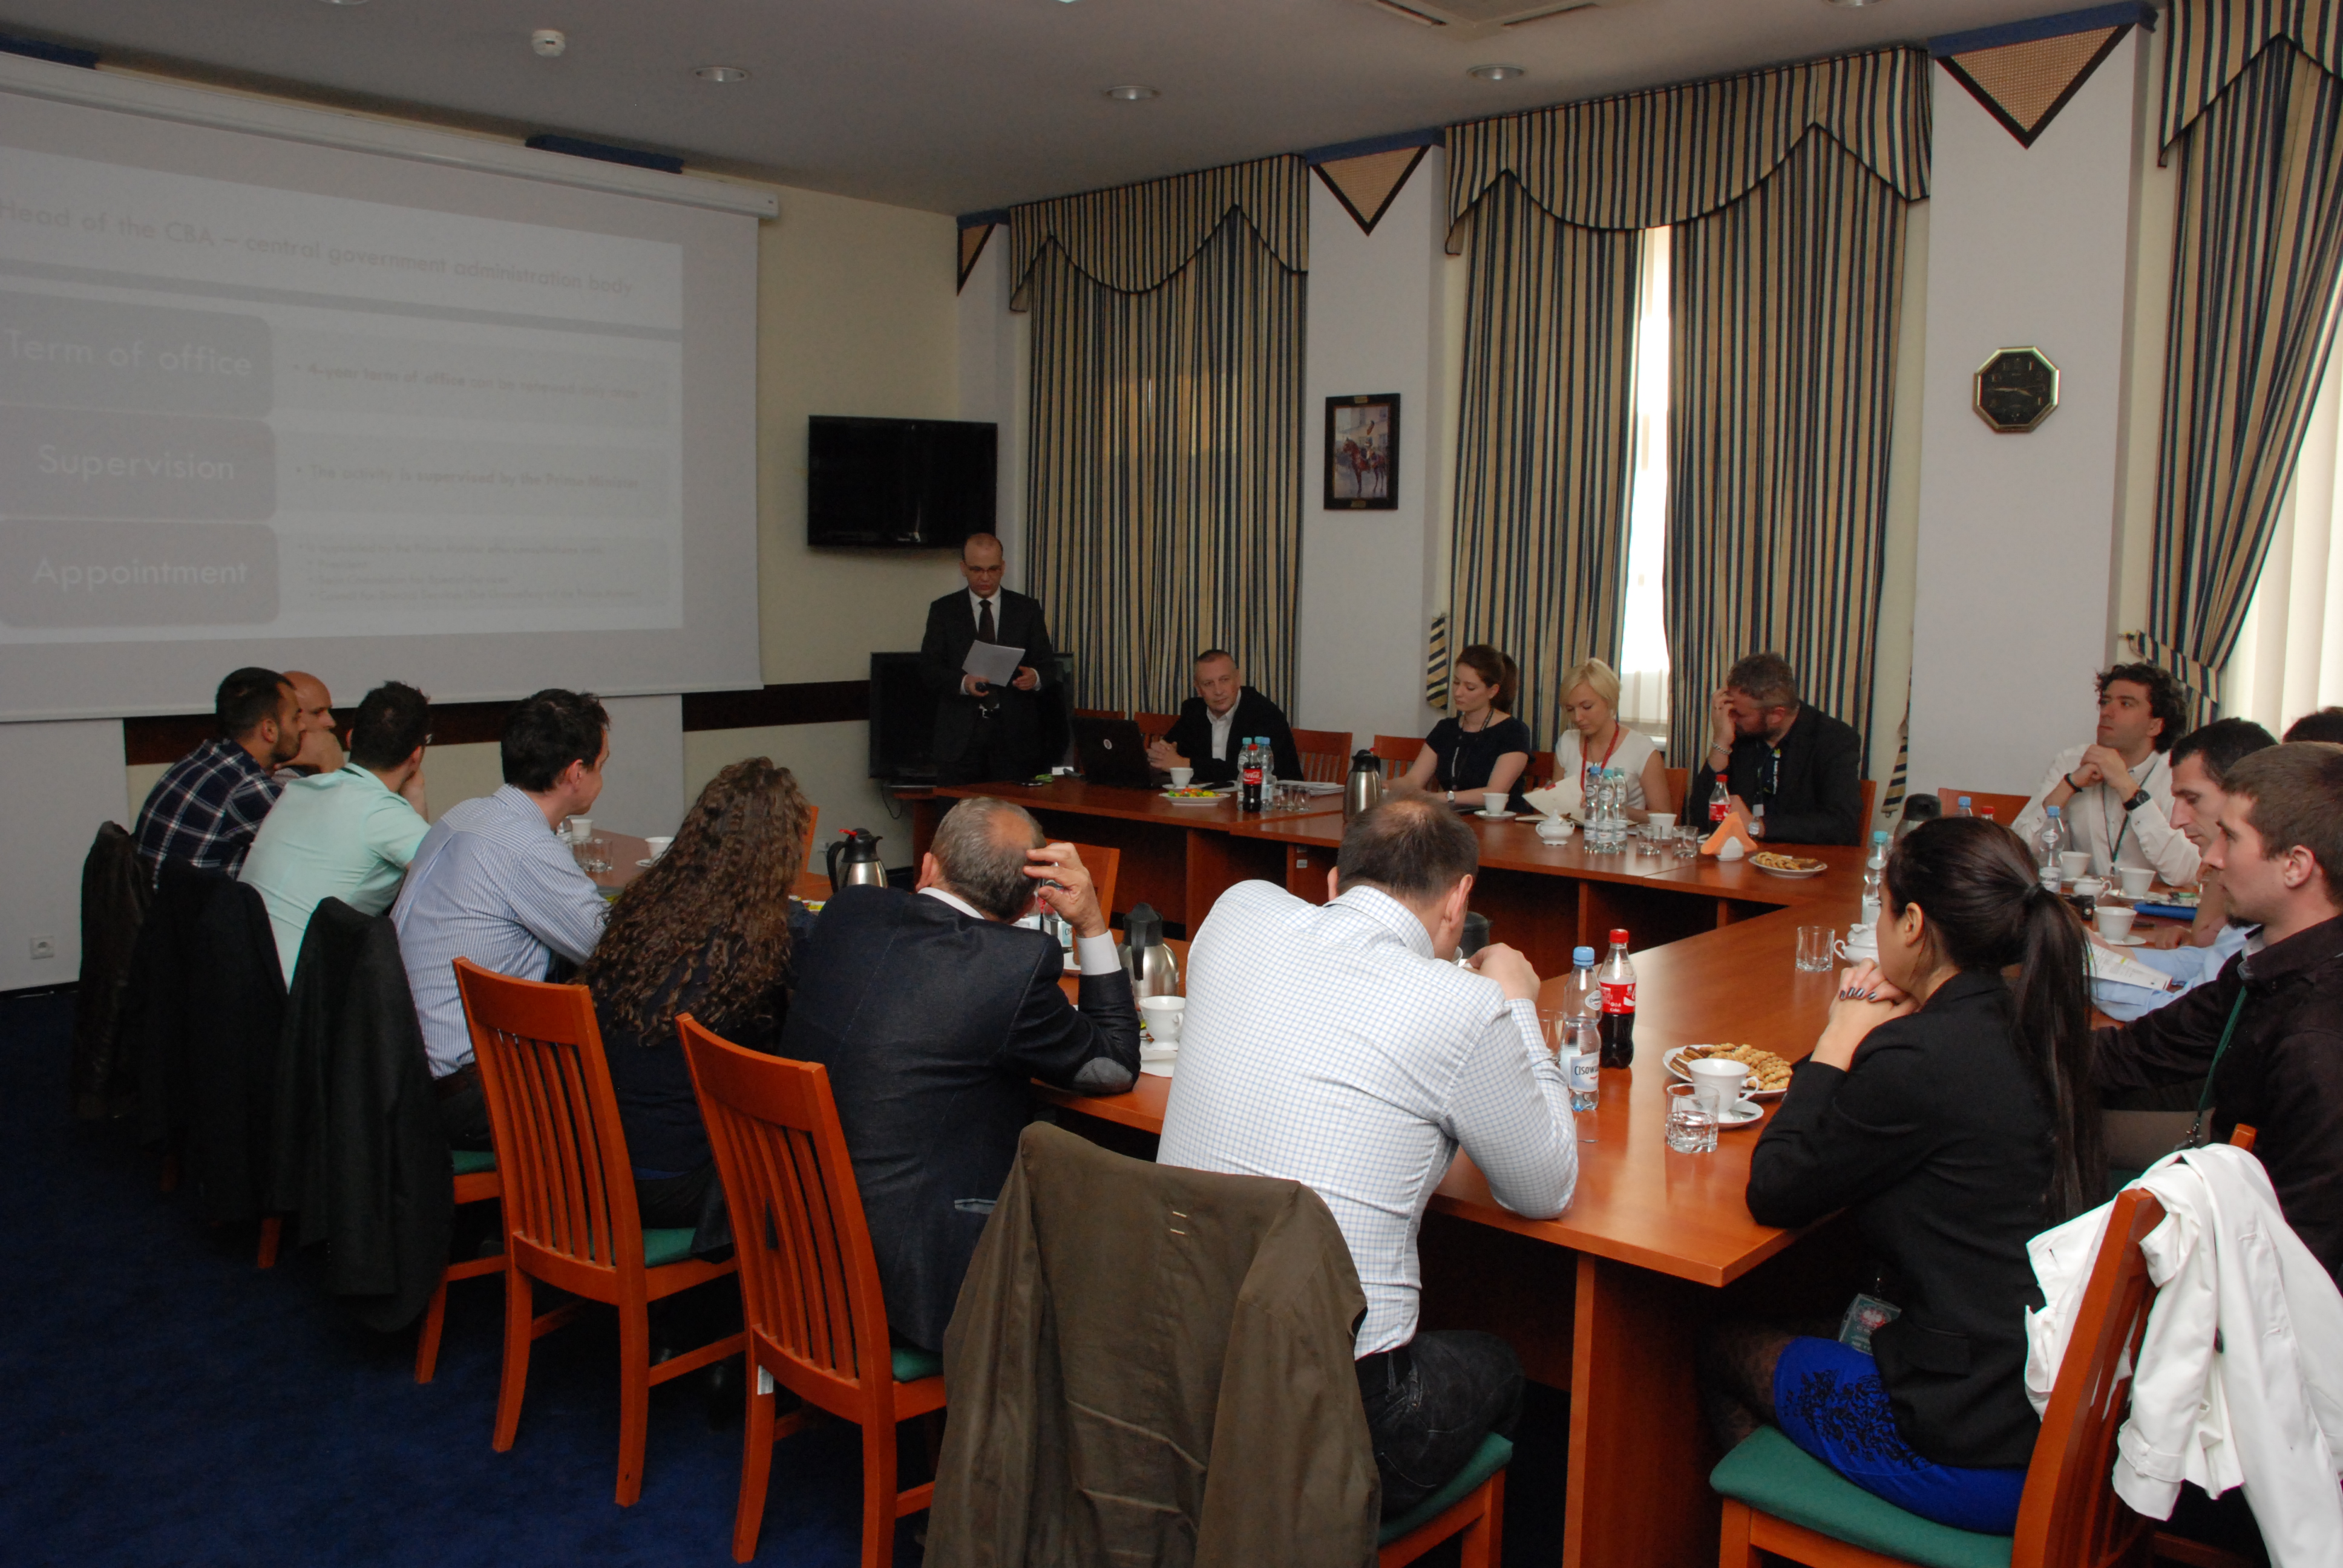  CBA representatives at a meeting with Balkan journalists